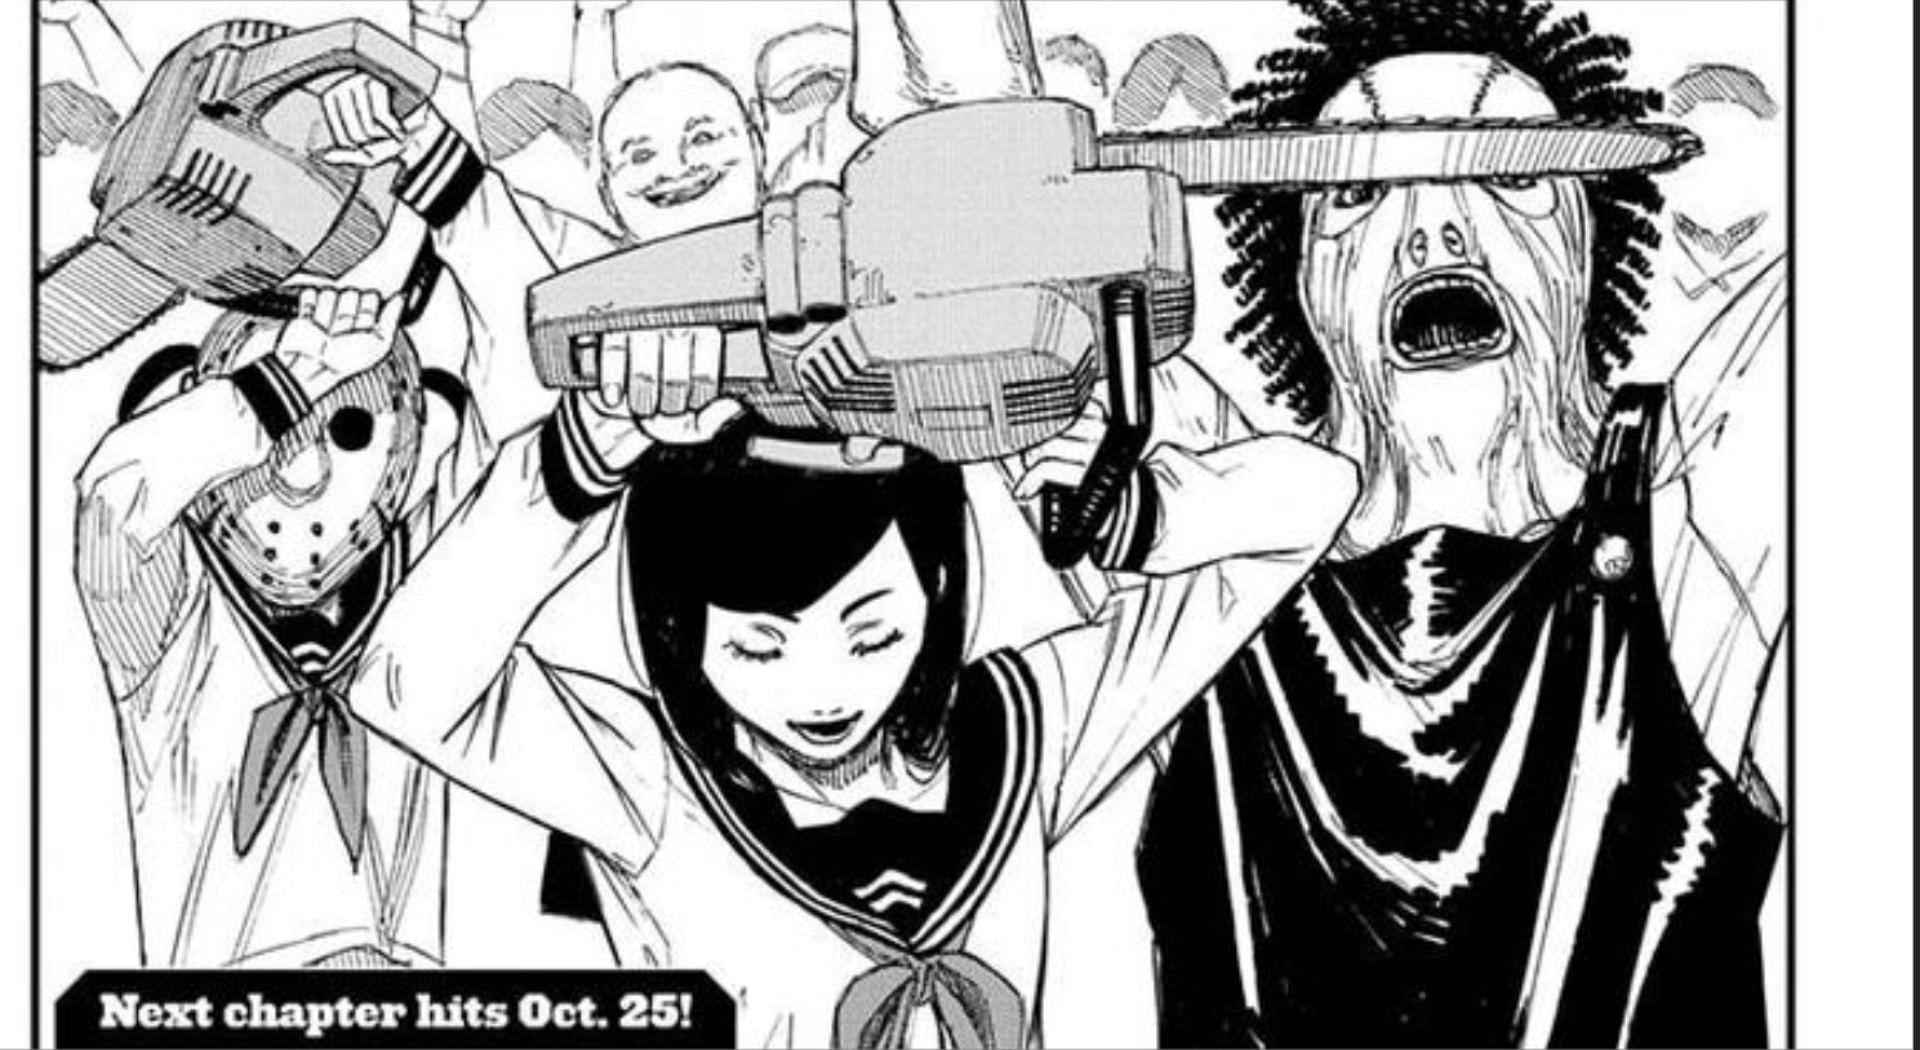 Masks of Leatherface and Jason in Chainsaw Man manga (Image via Shueisha)